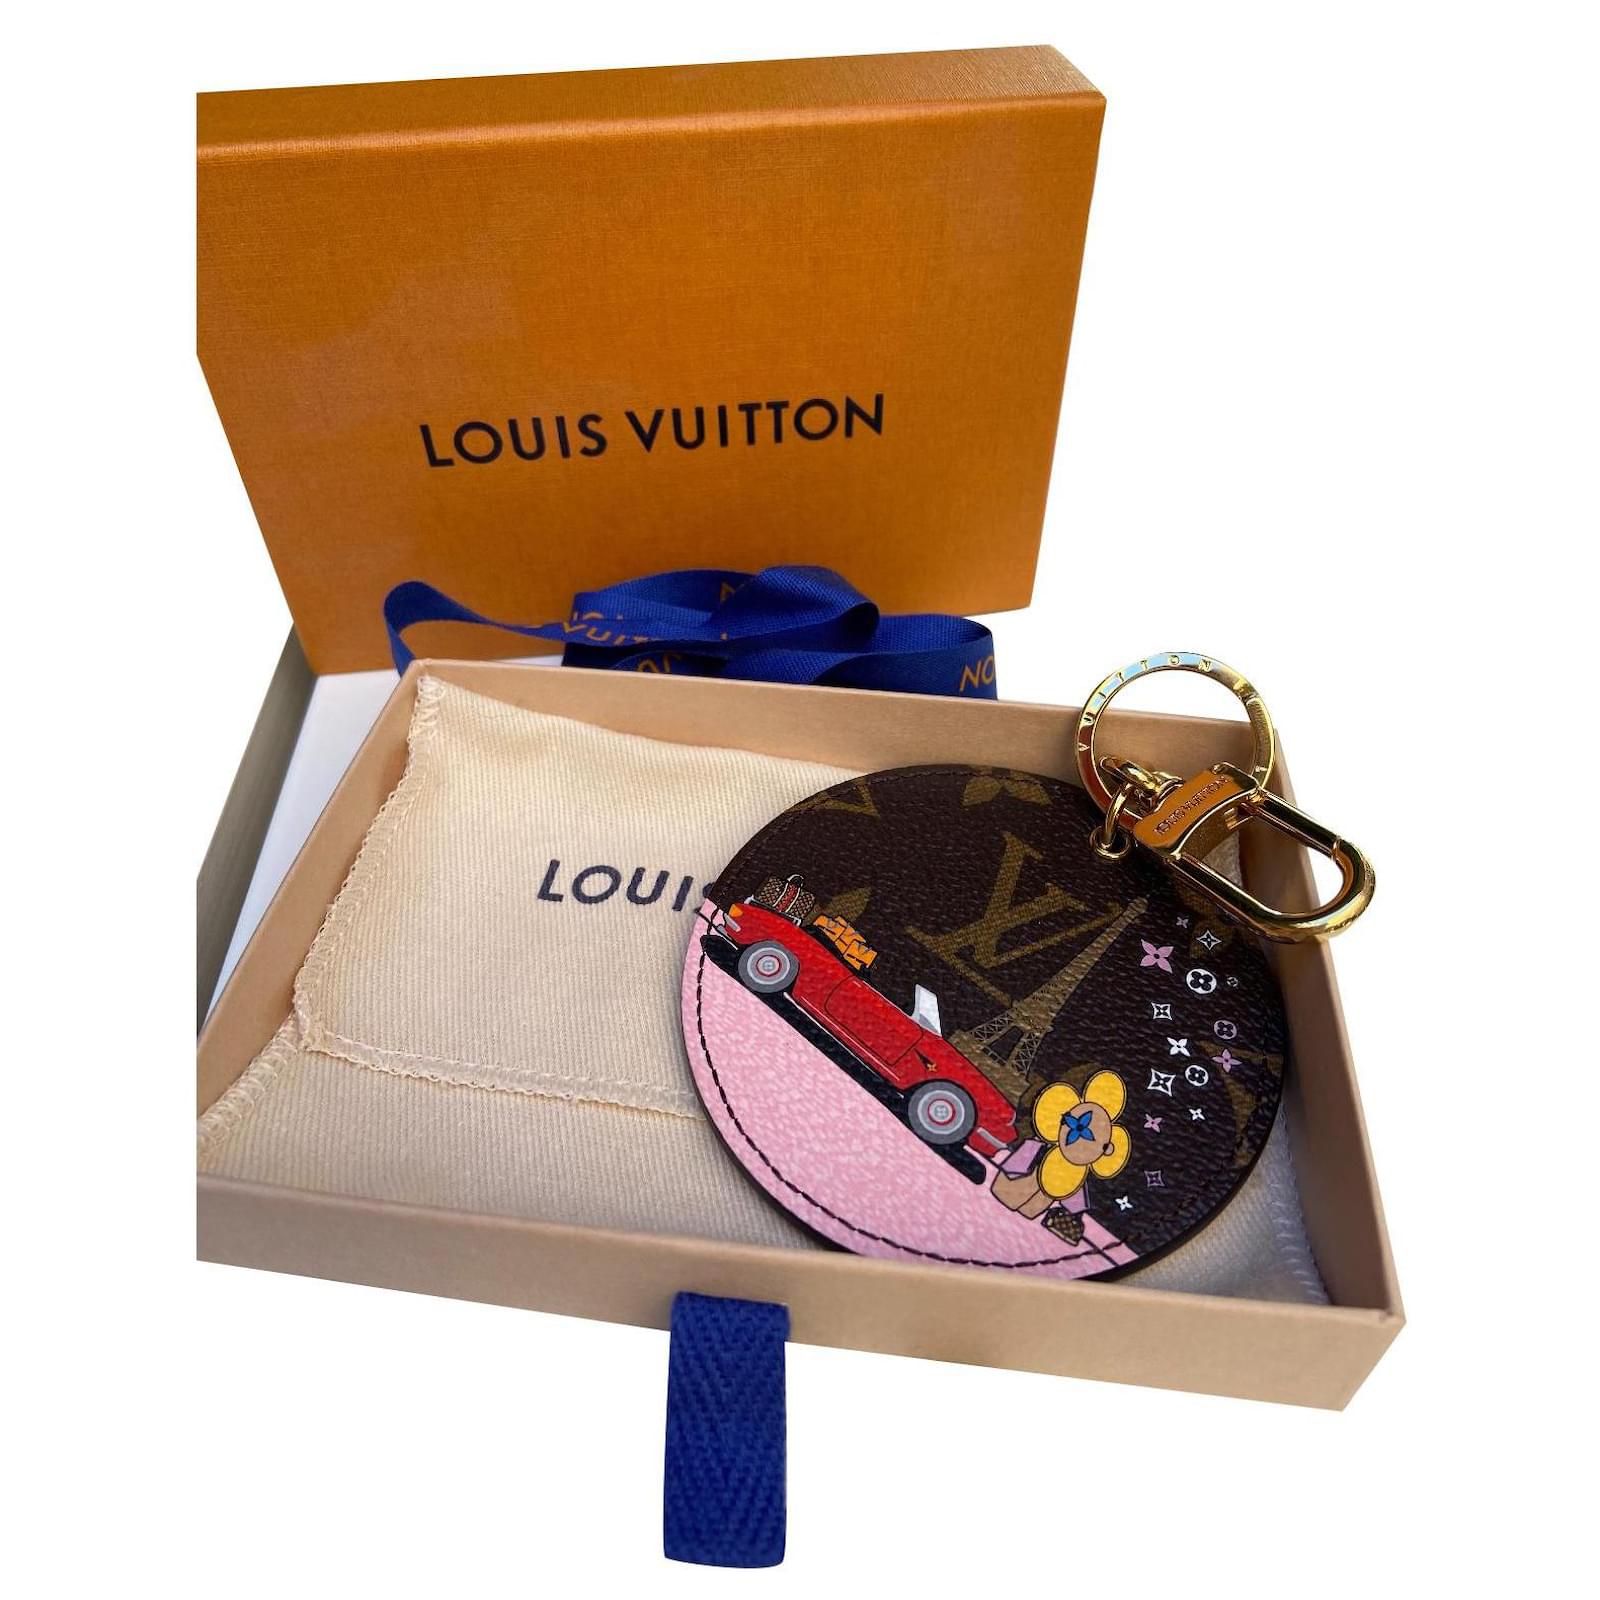 Louis Vuitton Special Edition 2019